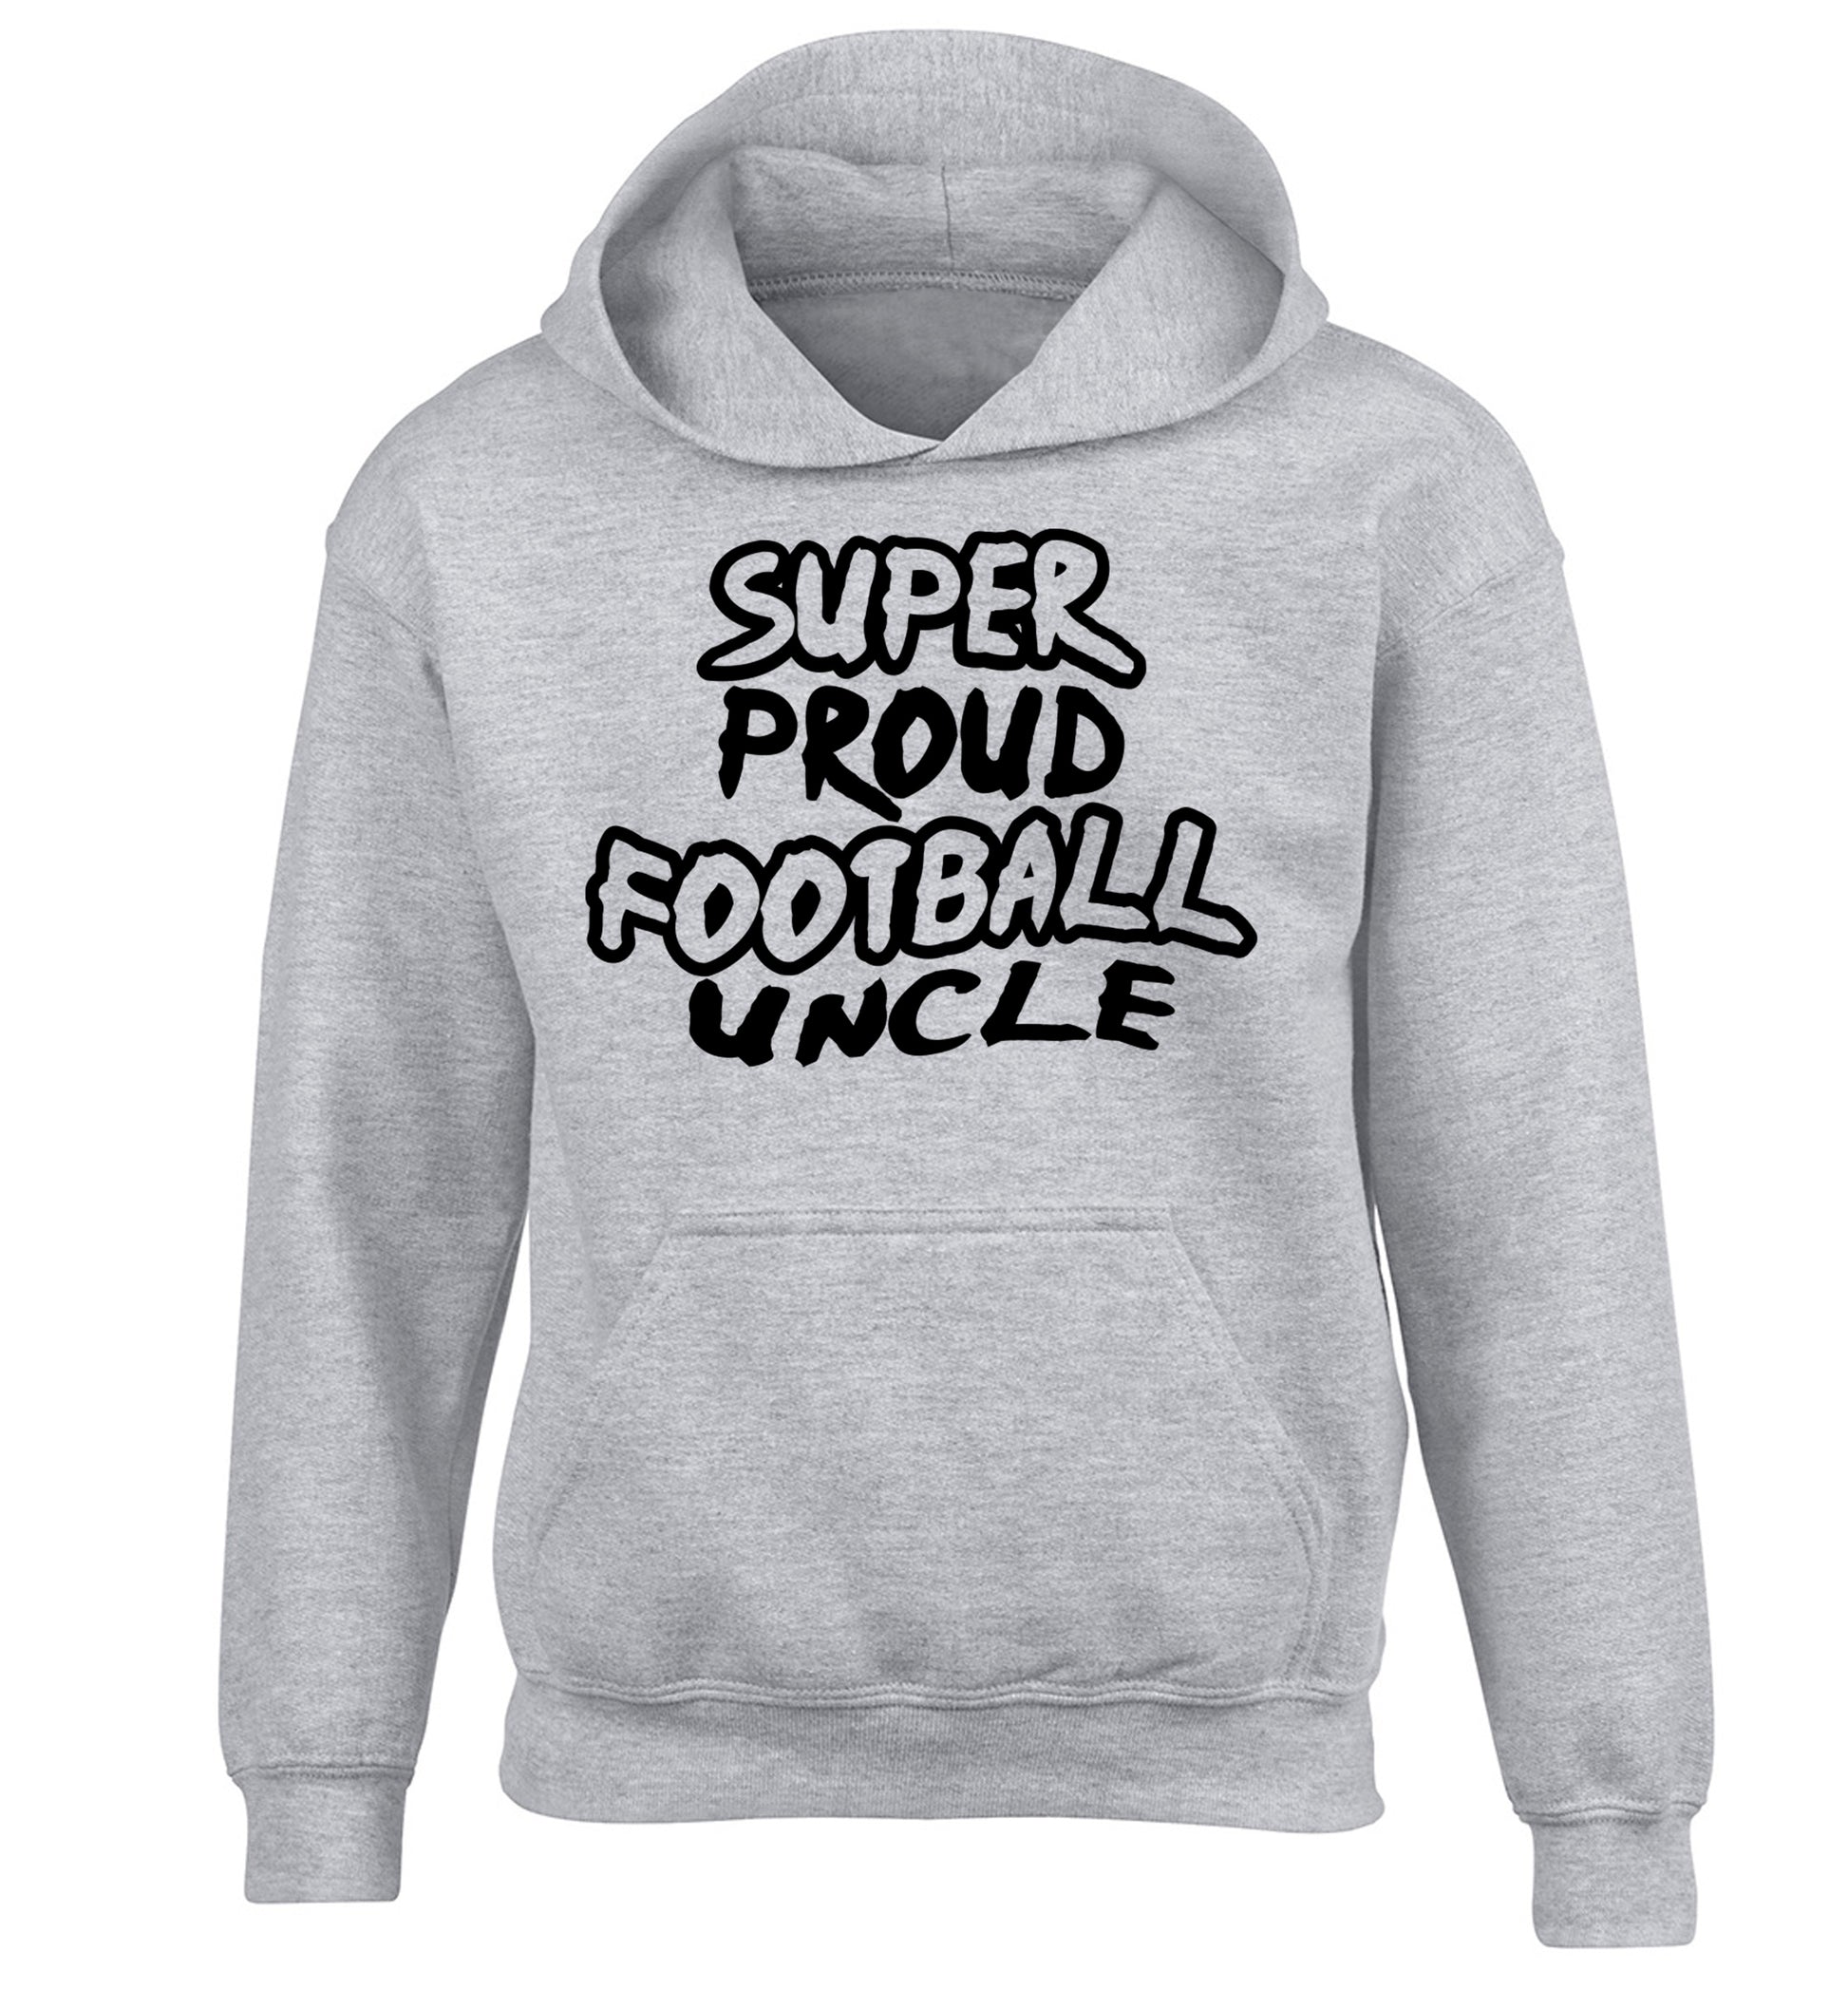 Super proud football uncle children's grey hoodie 12-14 Years